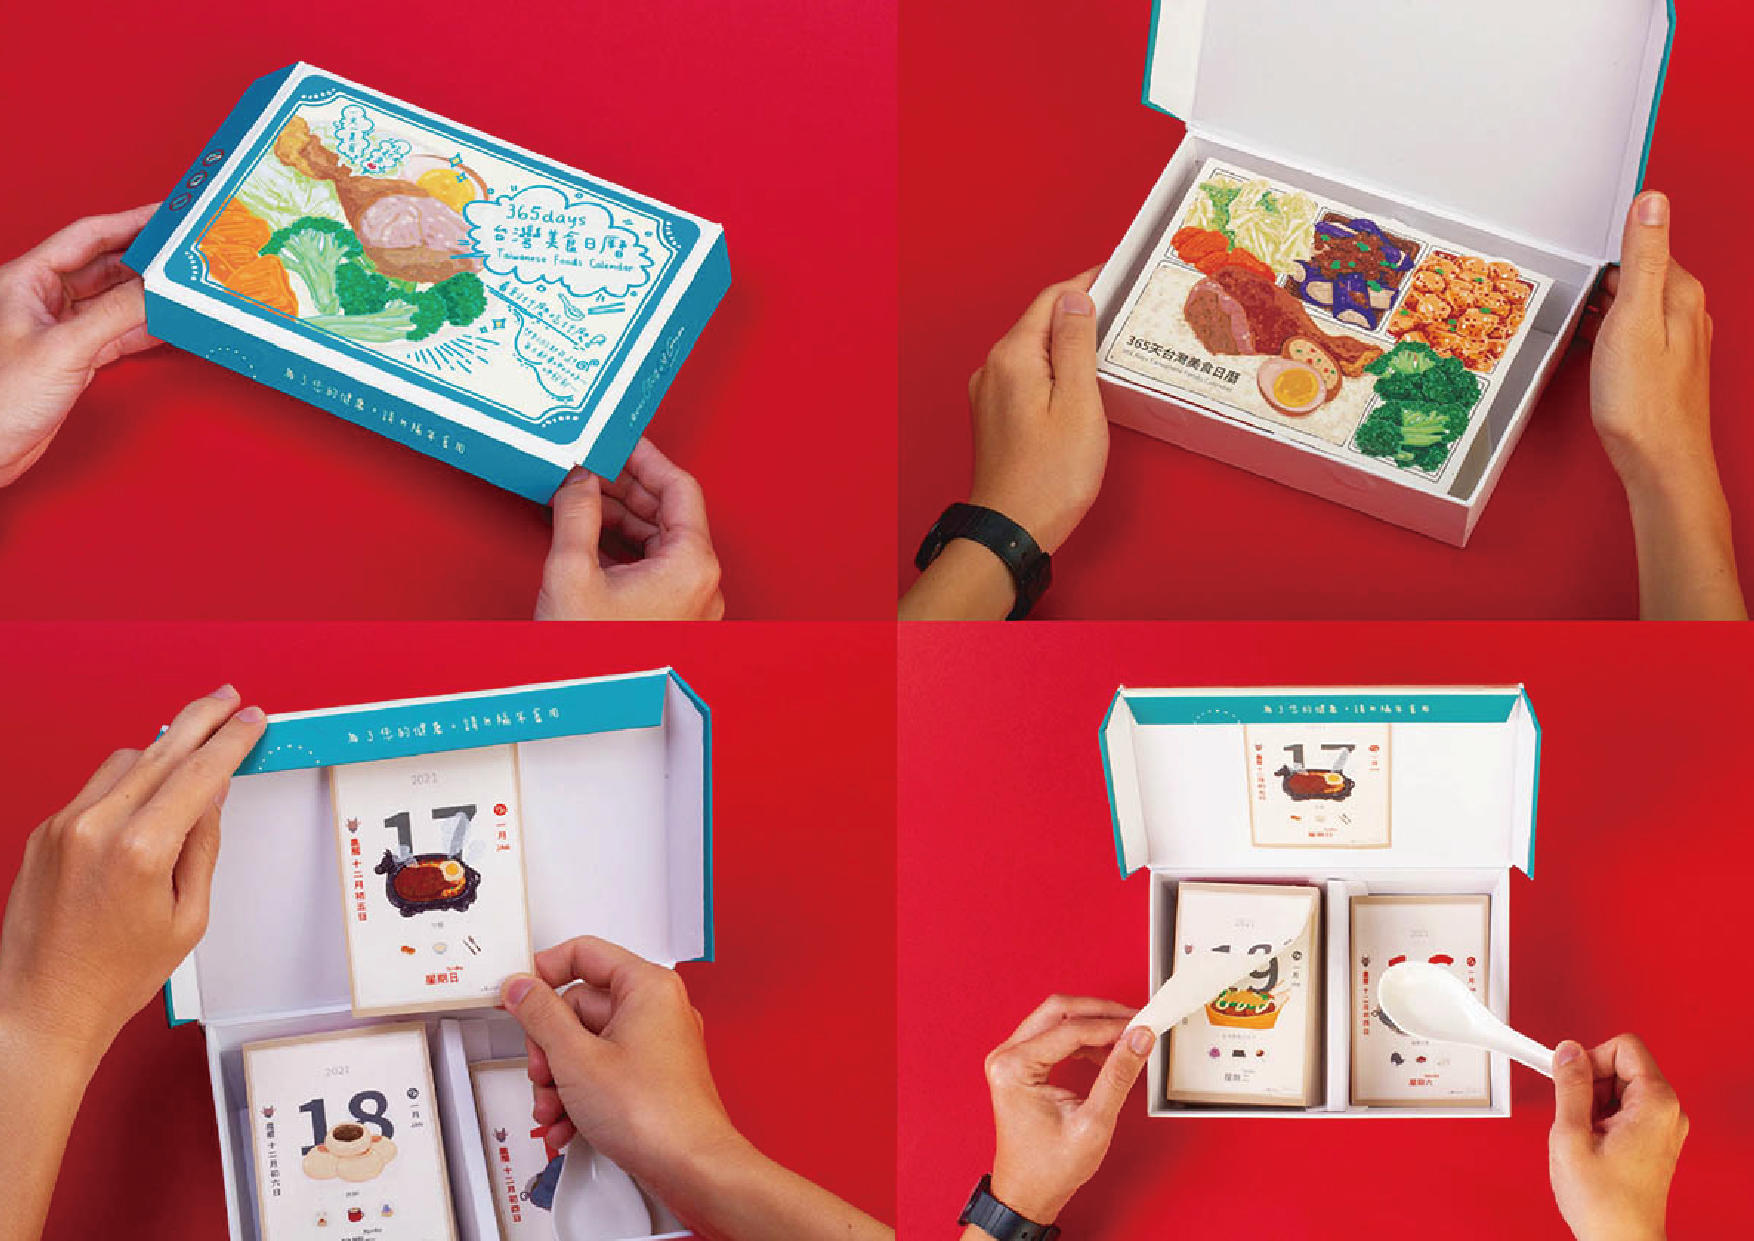 「365days台灣美食日曆」具有磁性的便當造型包裝。